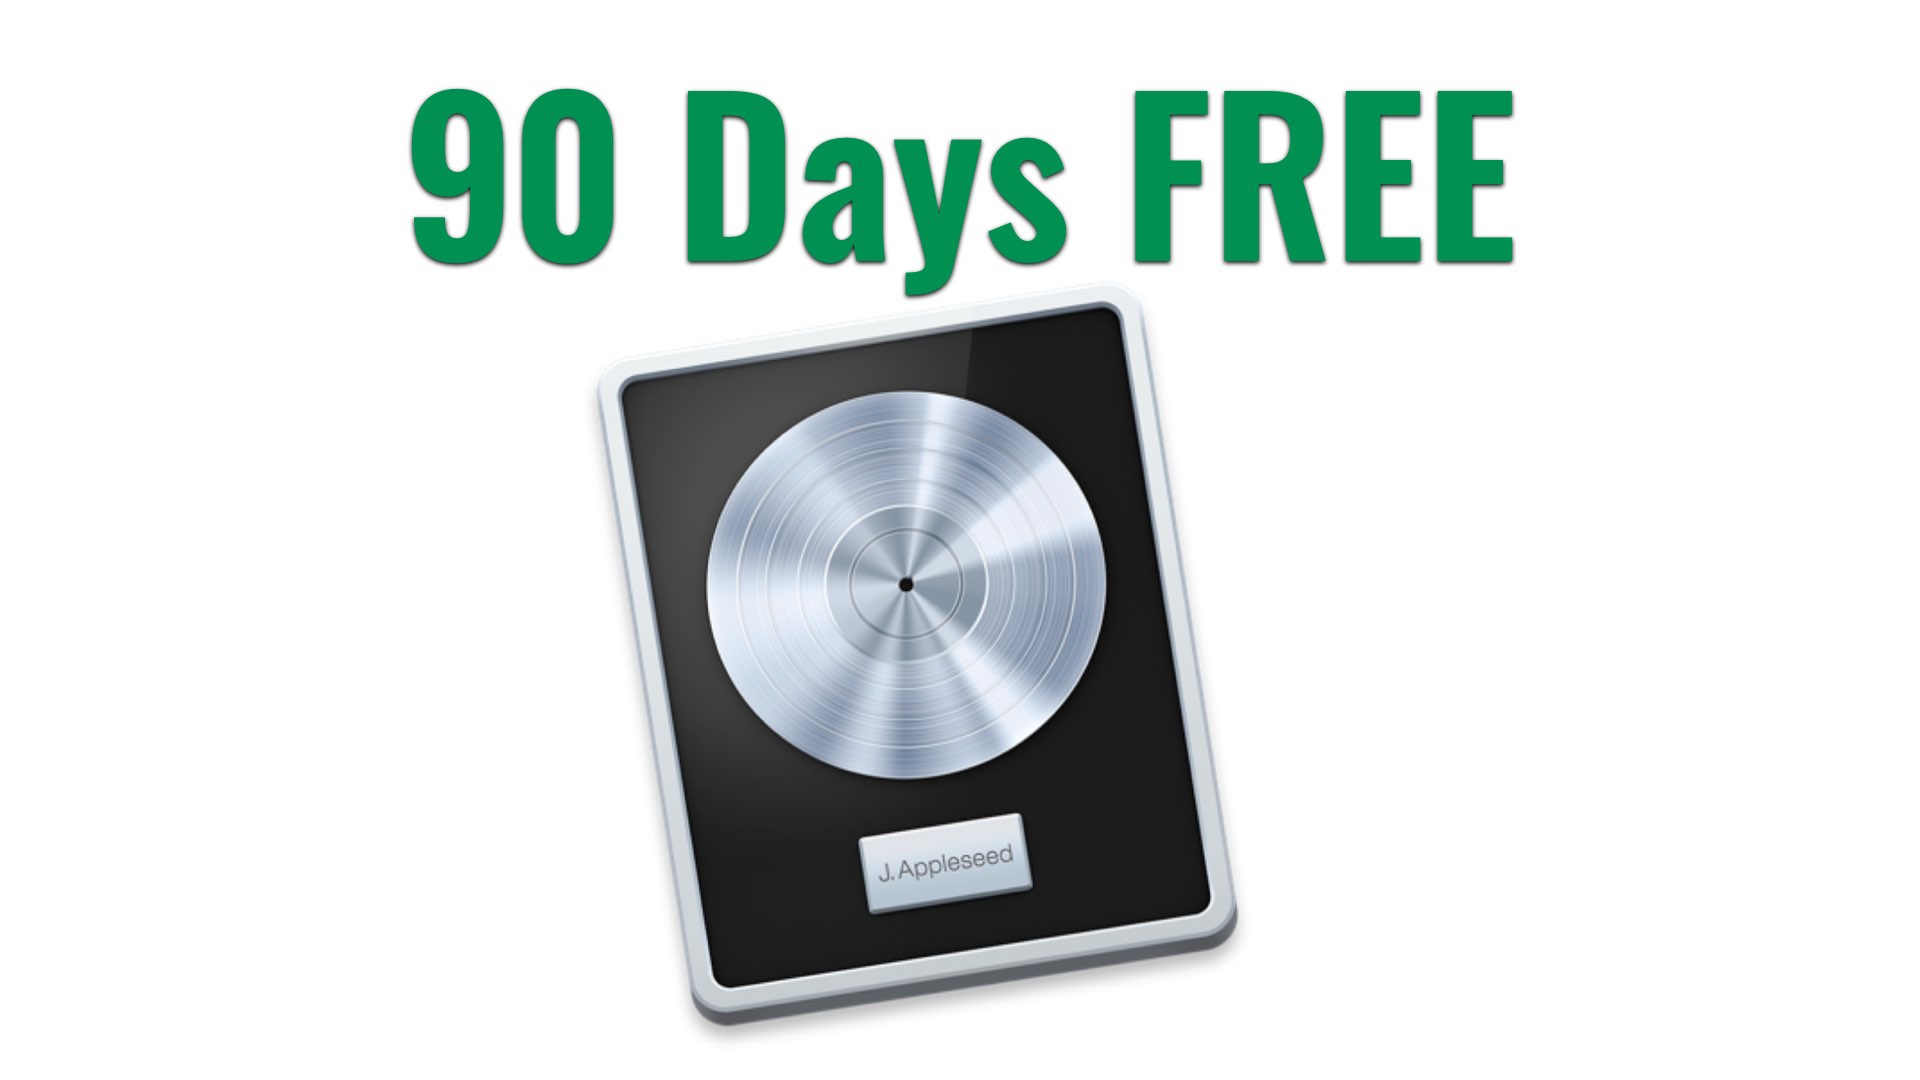 Logic Pro X free for 90 days